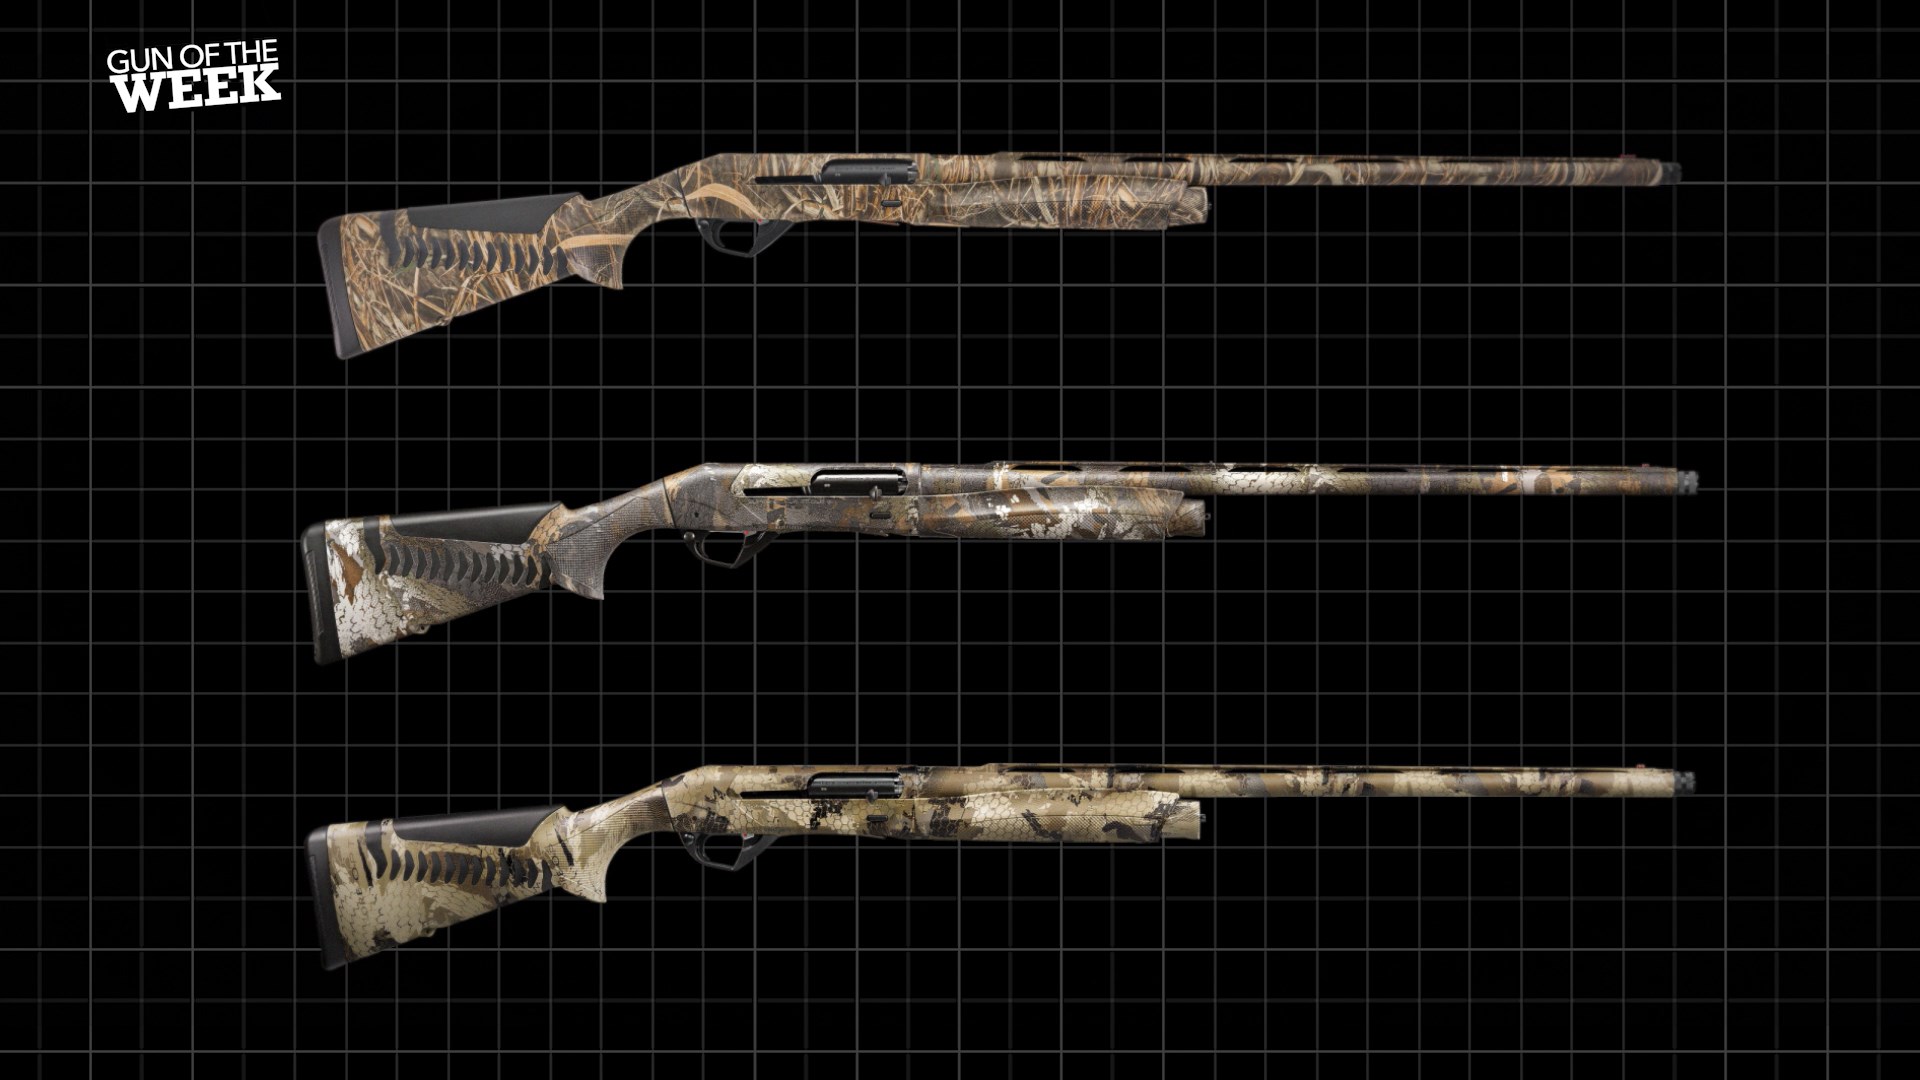 three benelli shotguns stack on black grid overlay shotguns camouflage 20 gauge SBE3 GUN OF THE WEEK